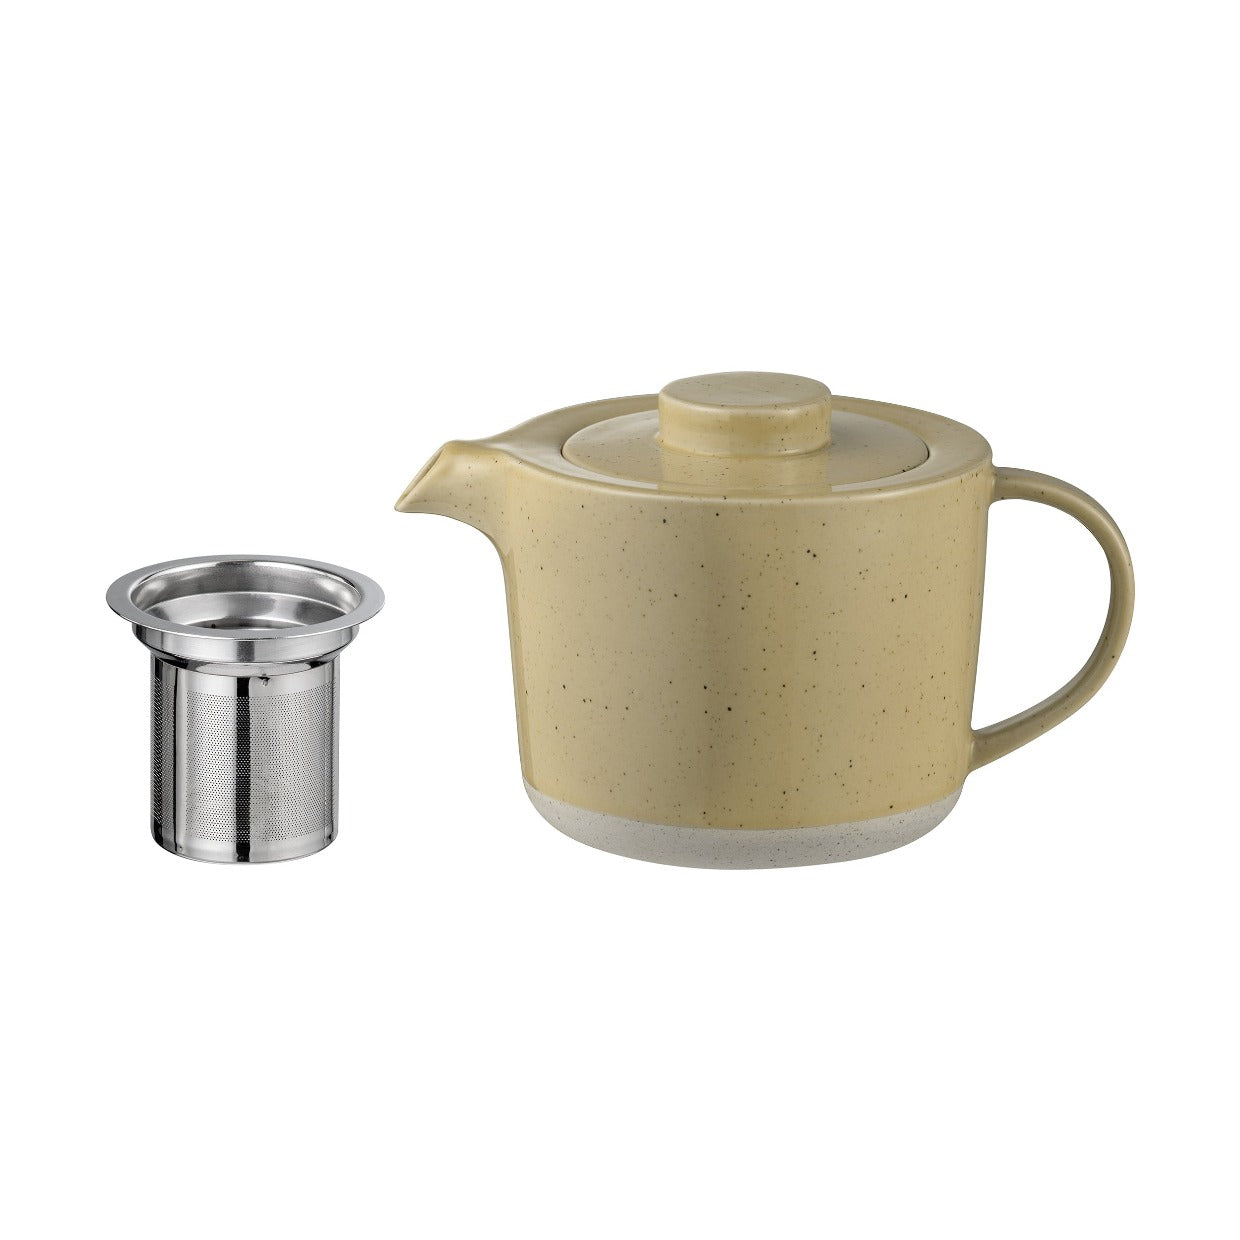 SABLO Teapot with Filter Exposed Savannah